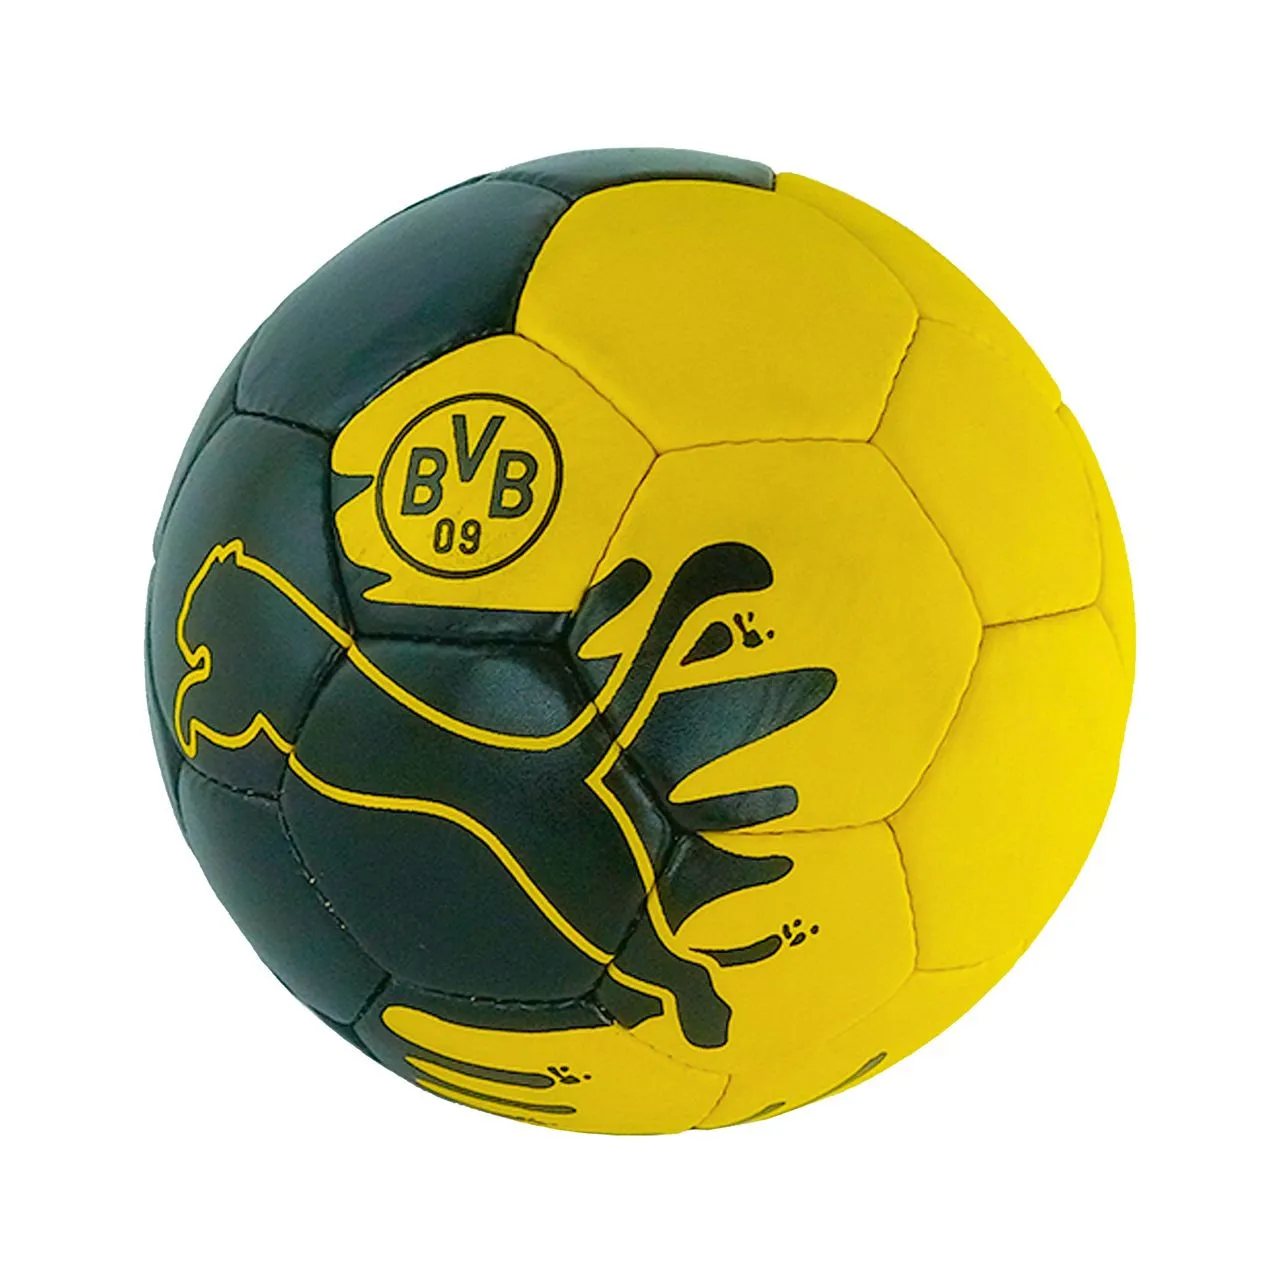 Futbol'nyy myach Borussia Dortmund
#1